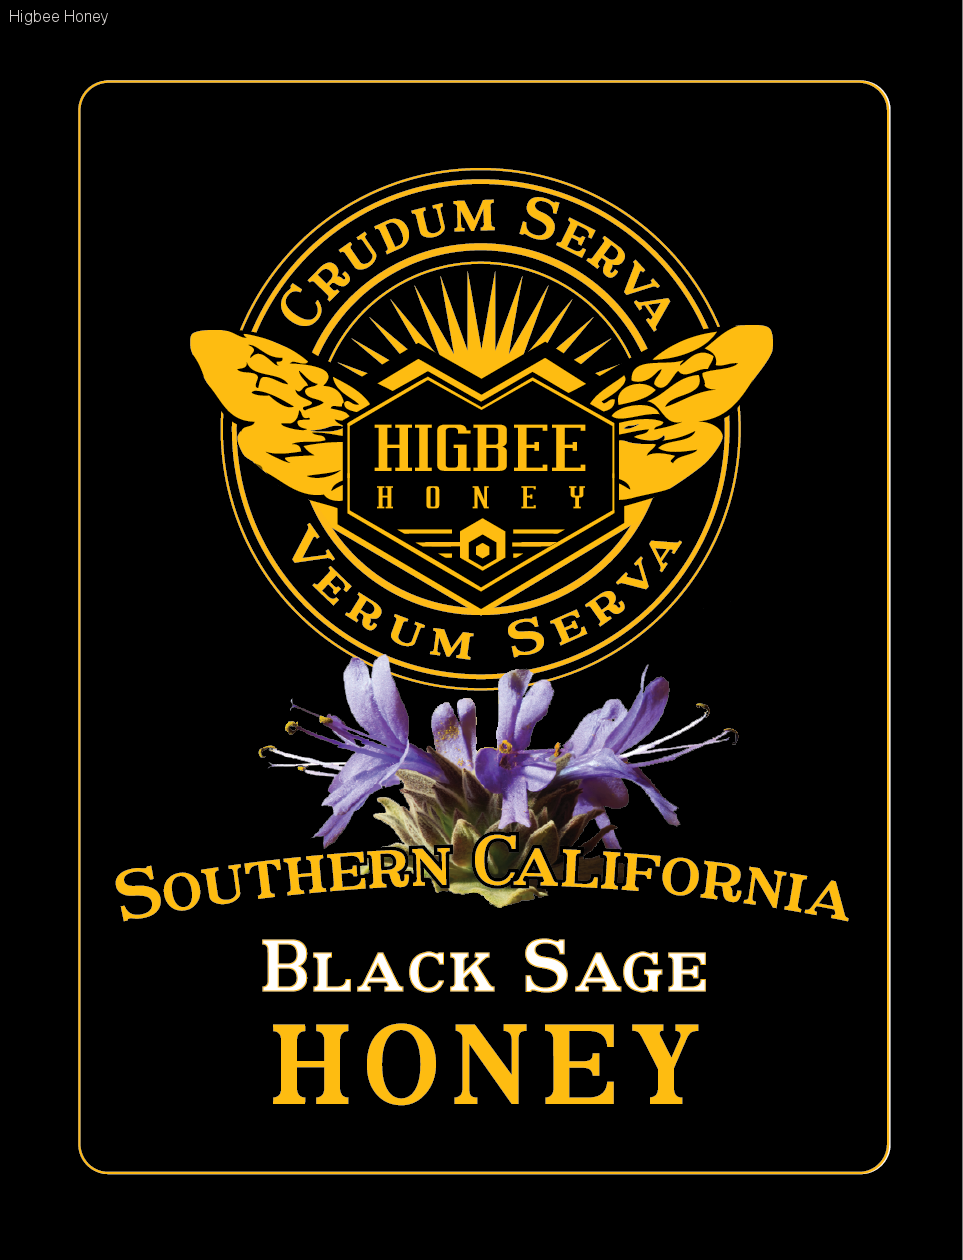 Southern California Black Sage Honey